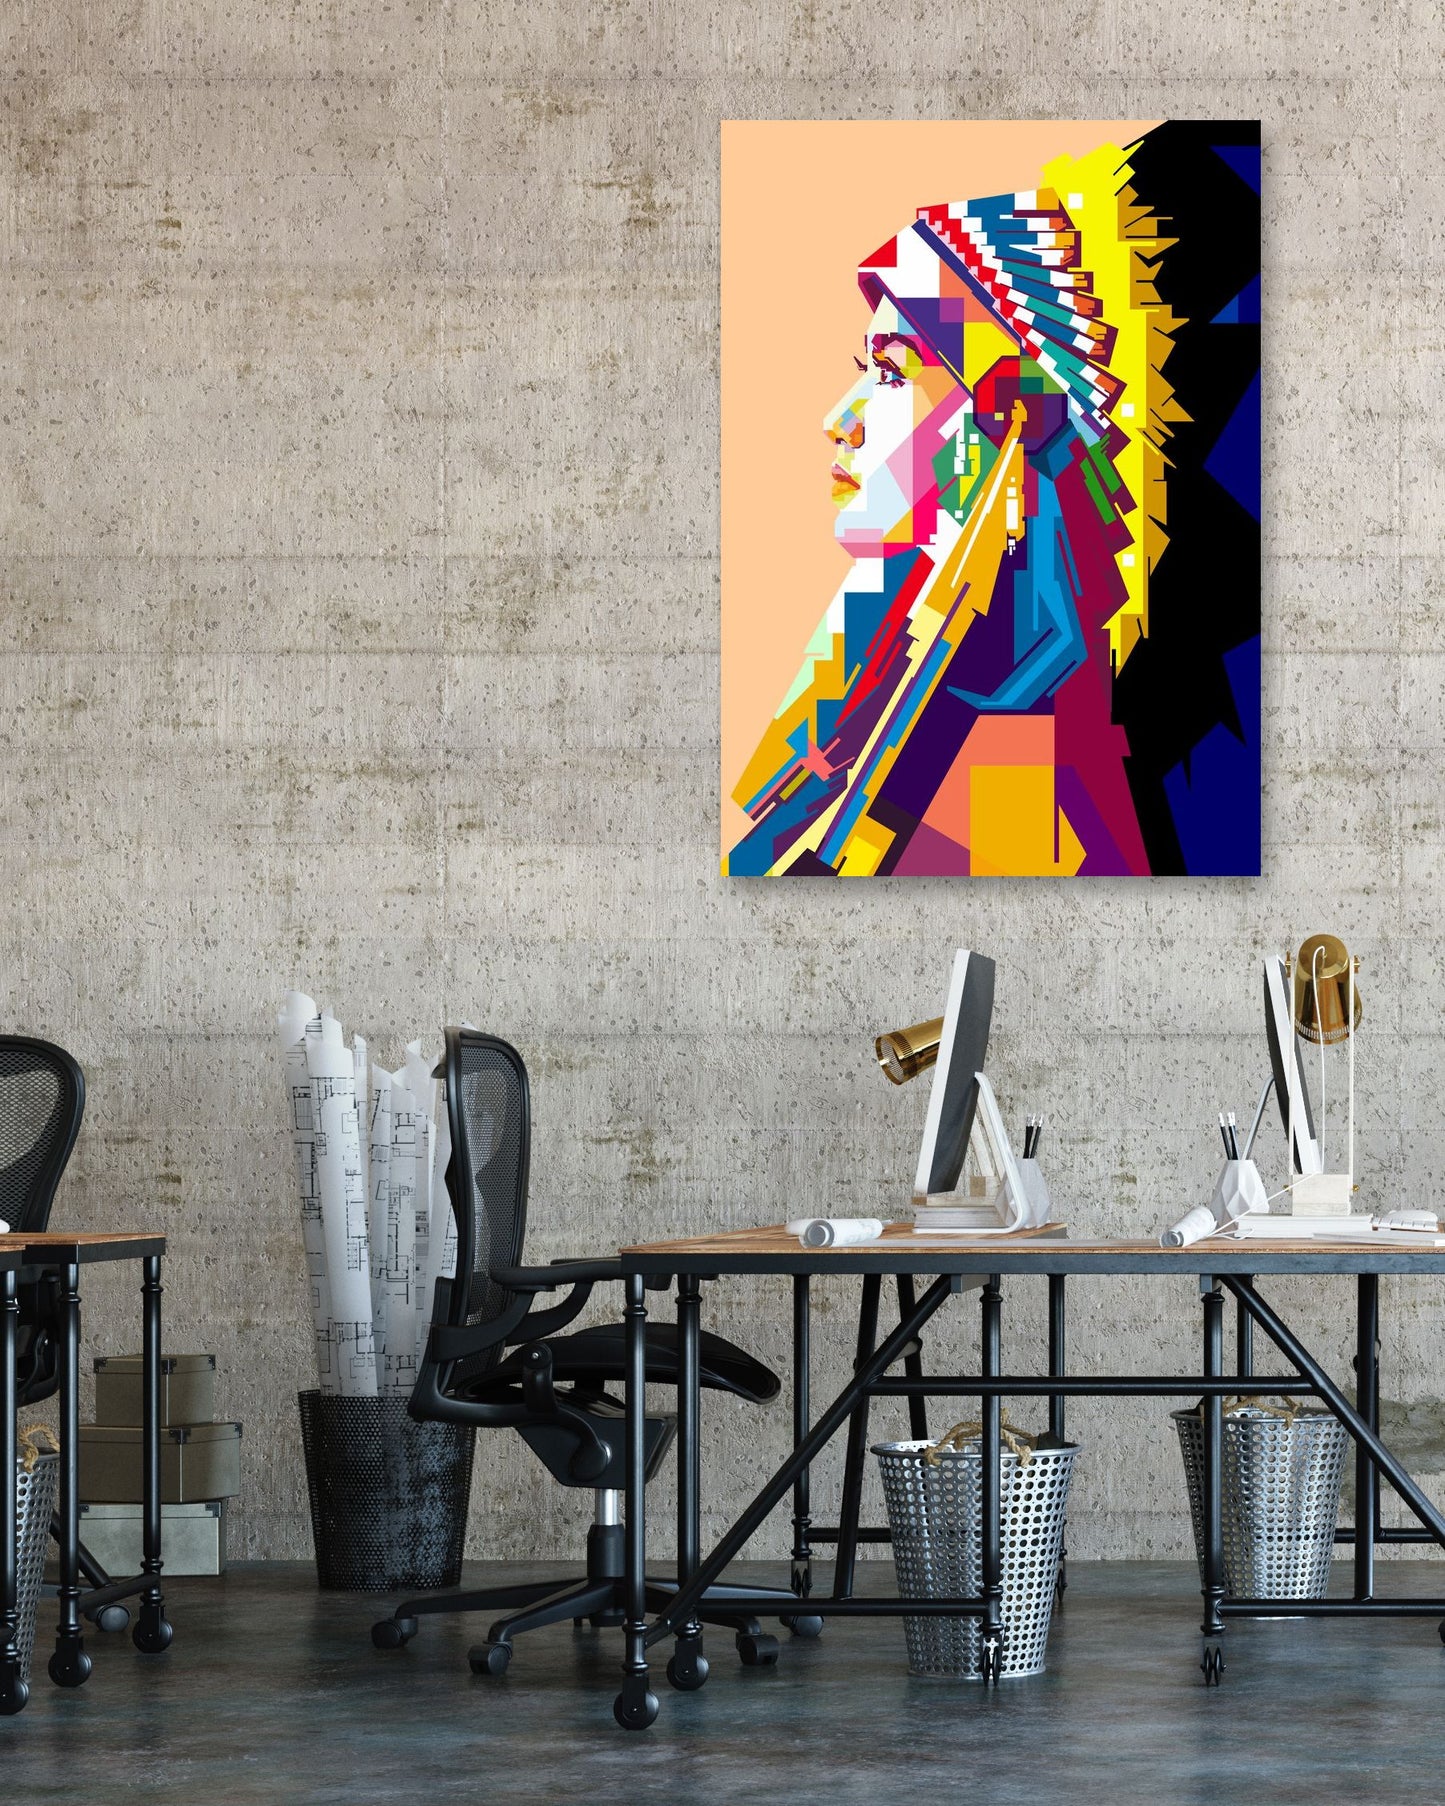 Apache Girl in Pop Art - @WPAPbyiant